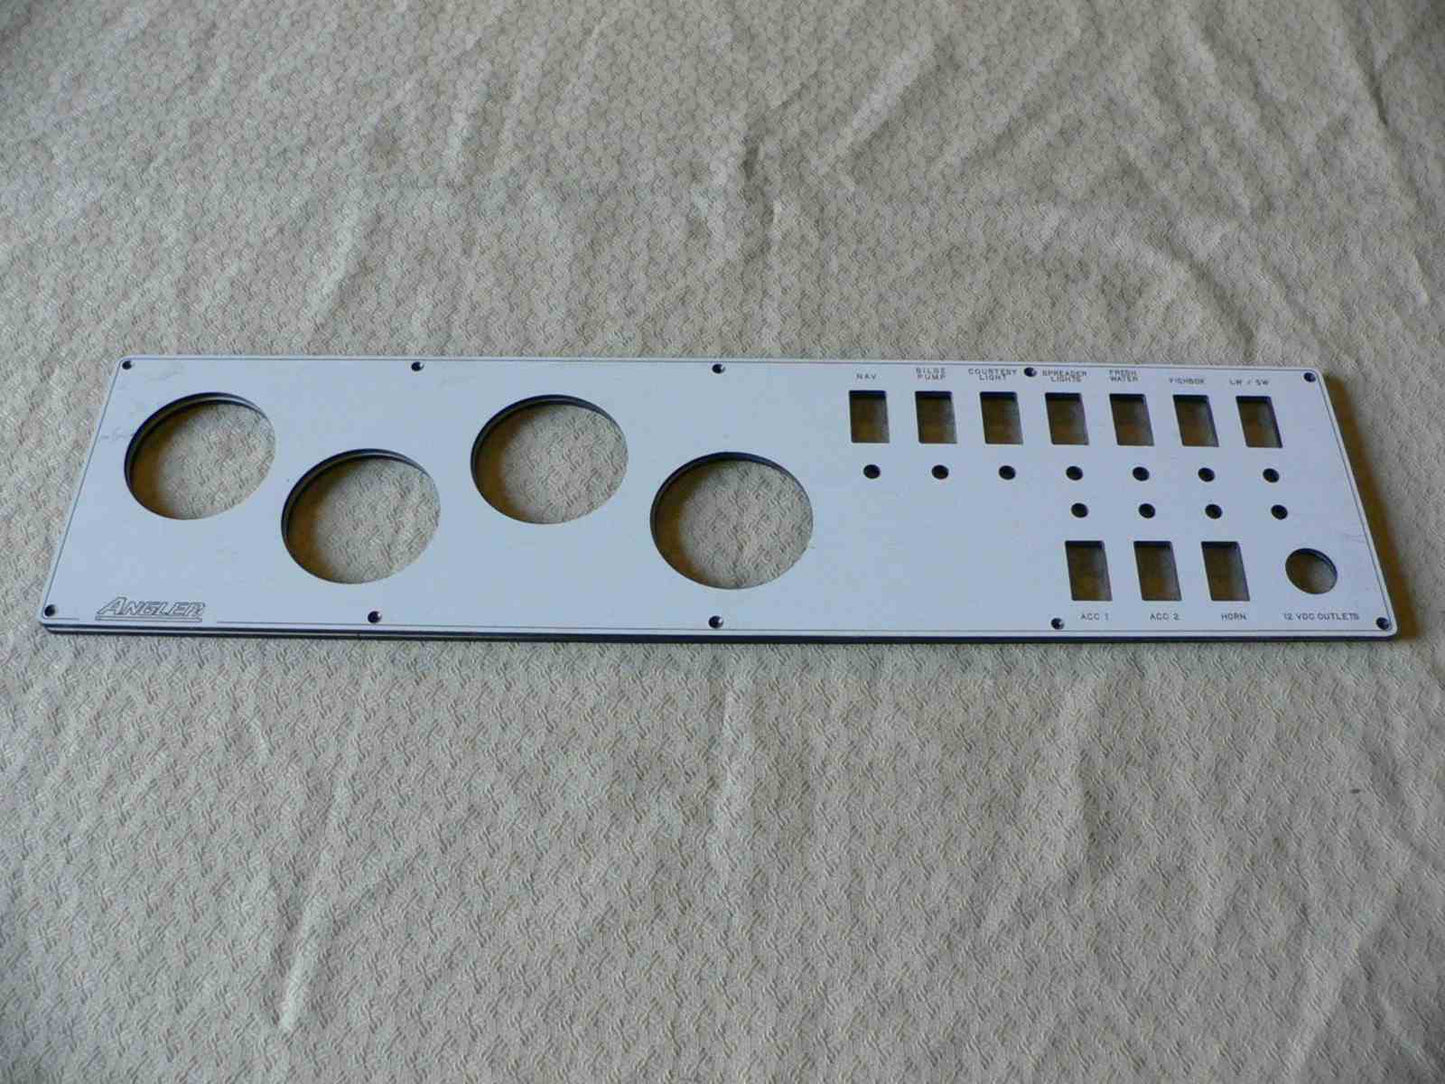 Angler Dash Instrument Panel 28"L bottom, 27-1/2"L top, 7"H.